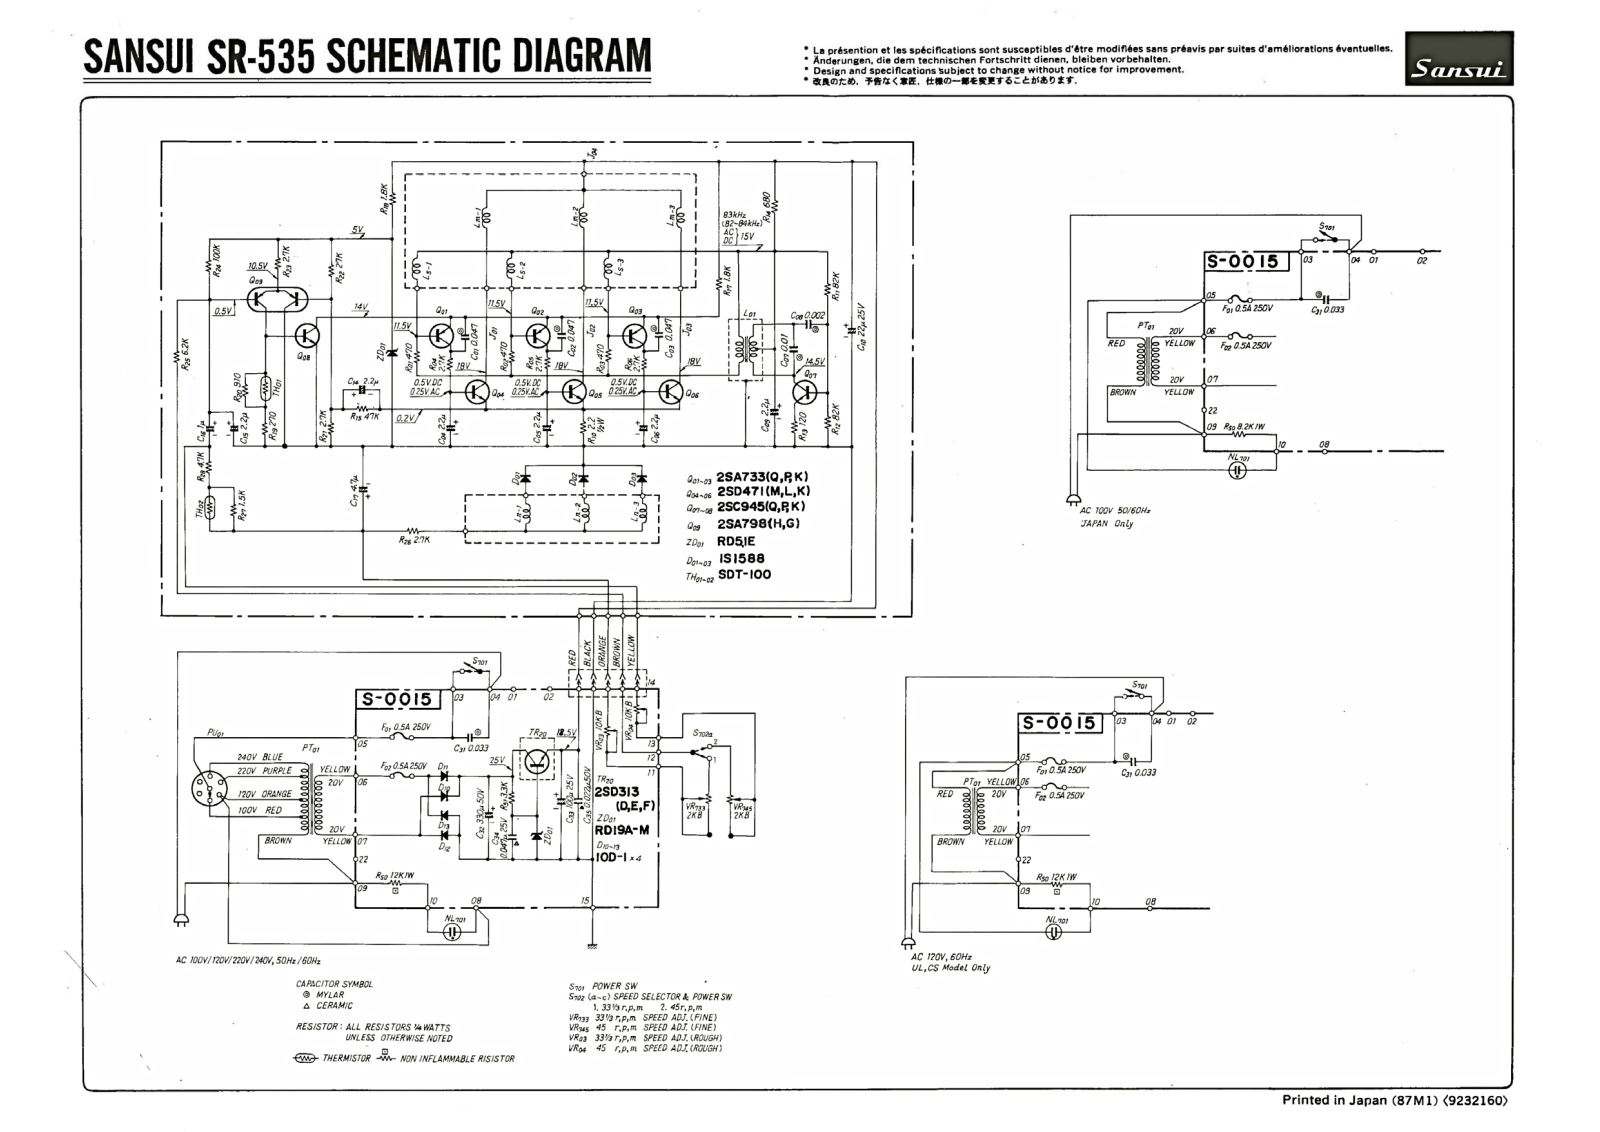 Sansui SR-535 Schematic